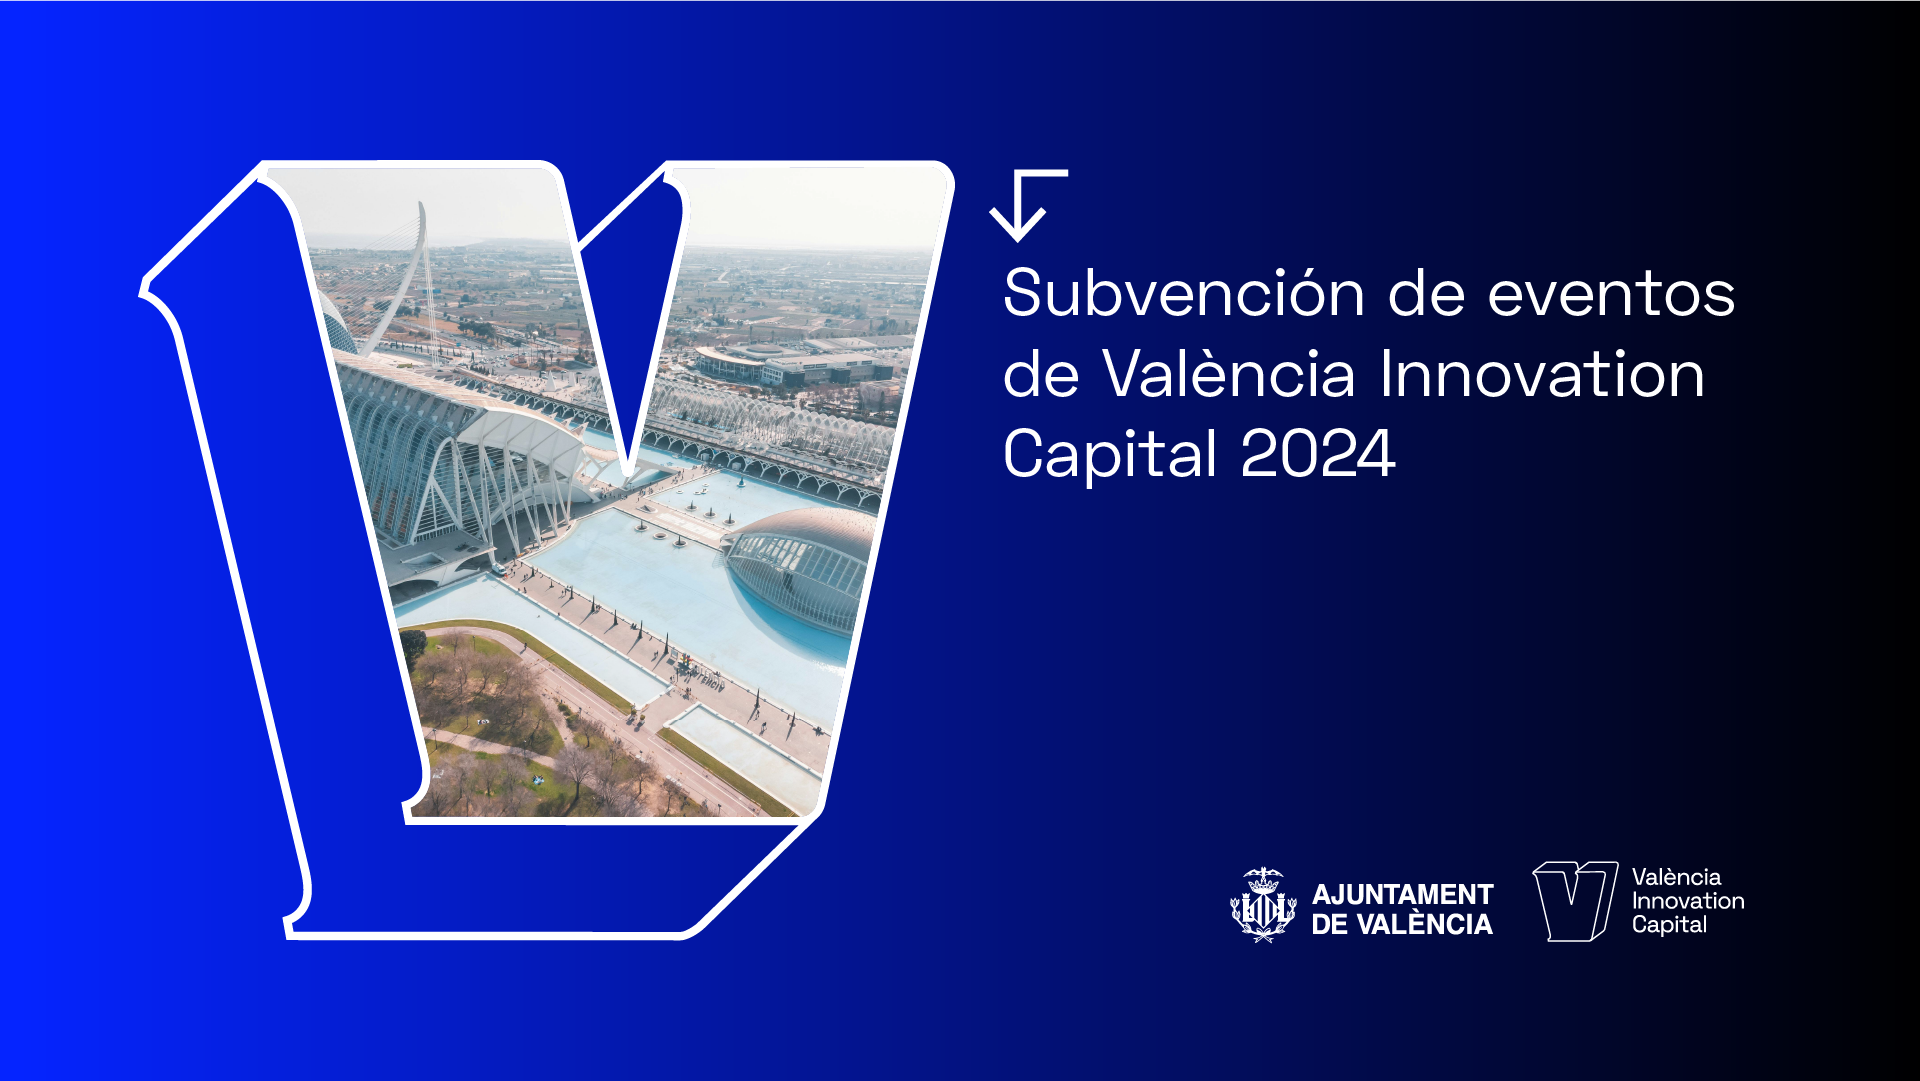 Subvención de eventos de València Innovation Capital 2024